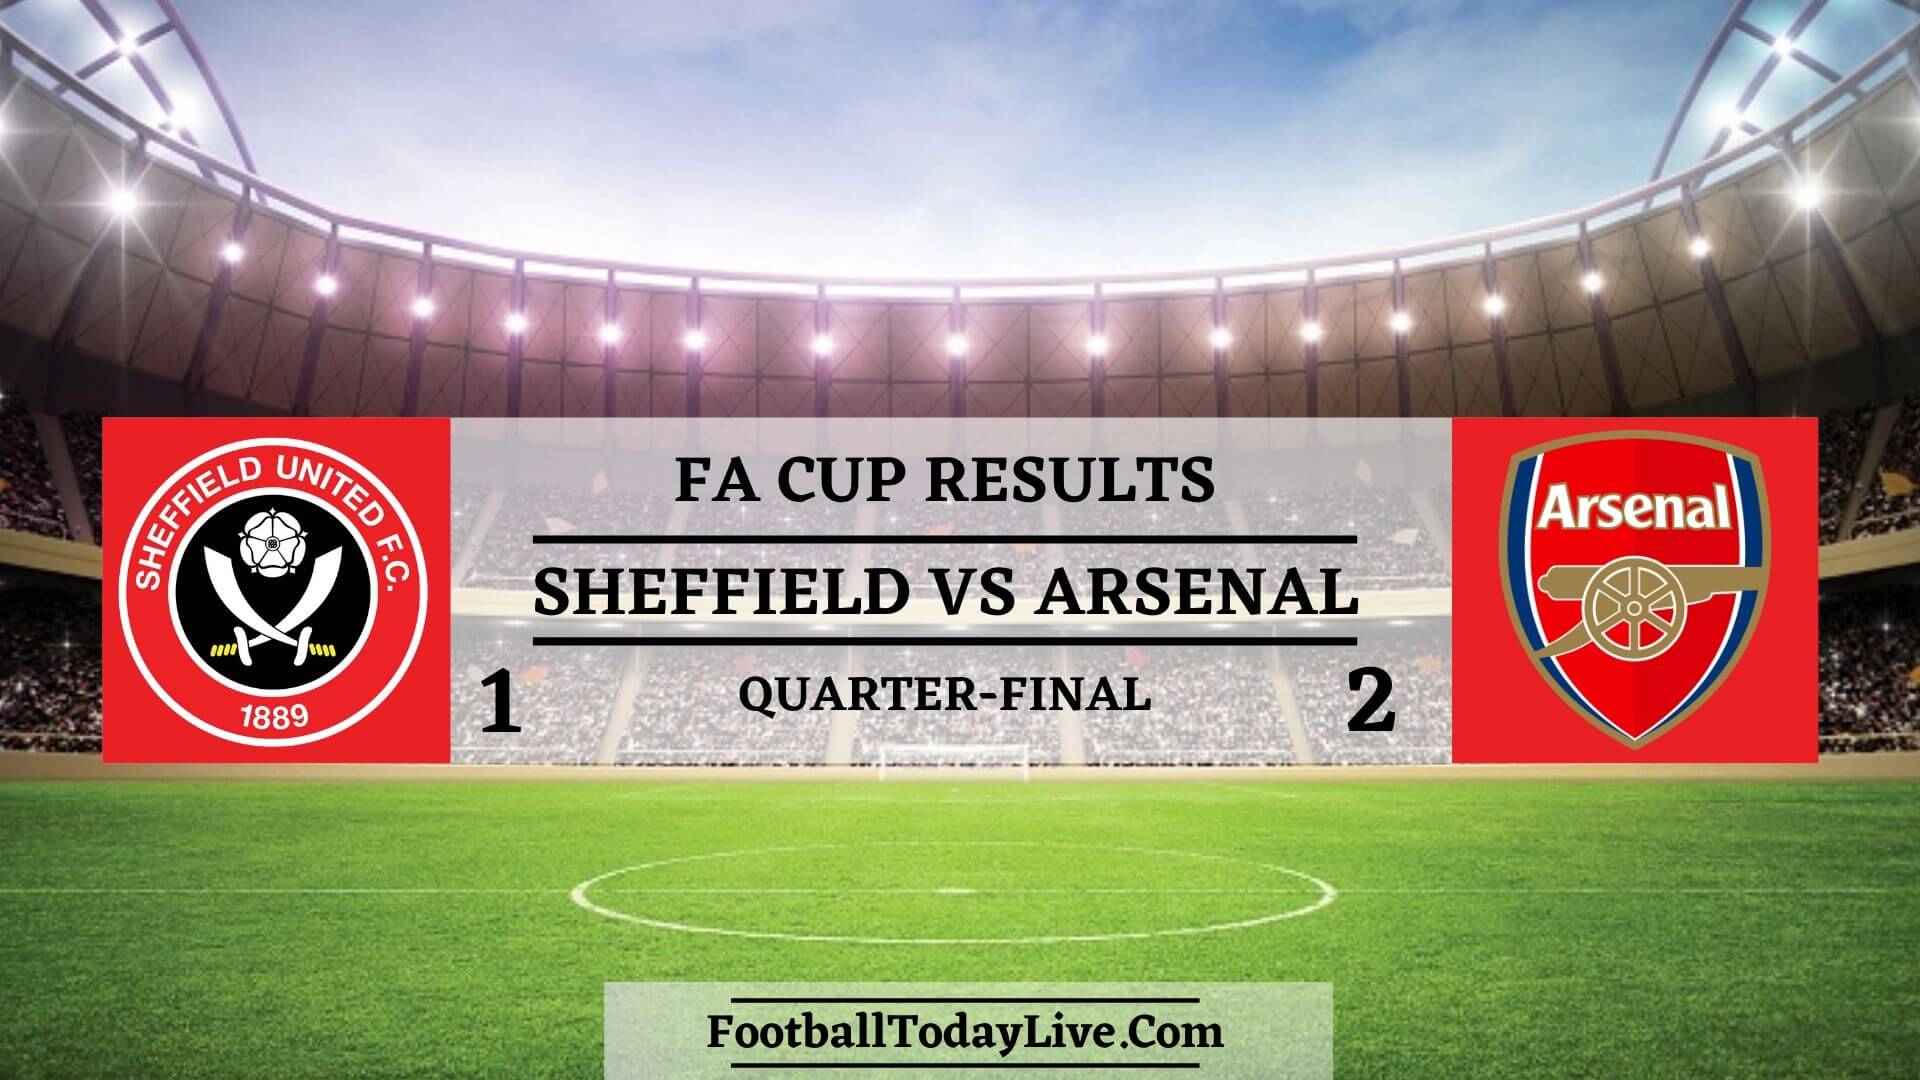 Sheffield United Vs Arsenal | FA Cup Quarter-Final Result 2020